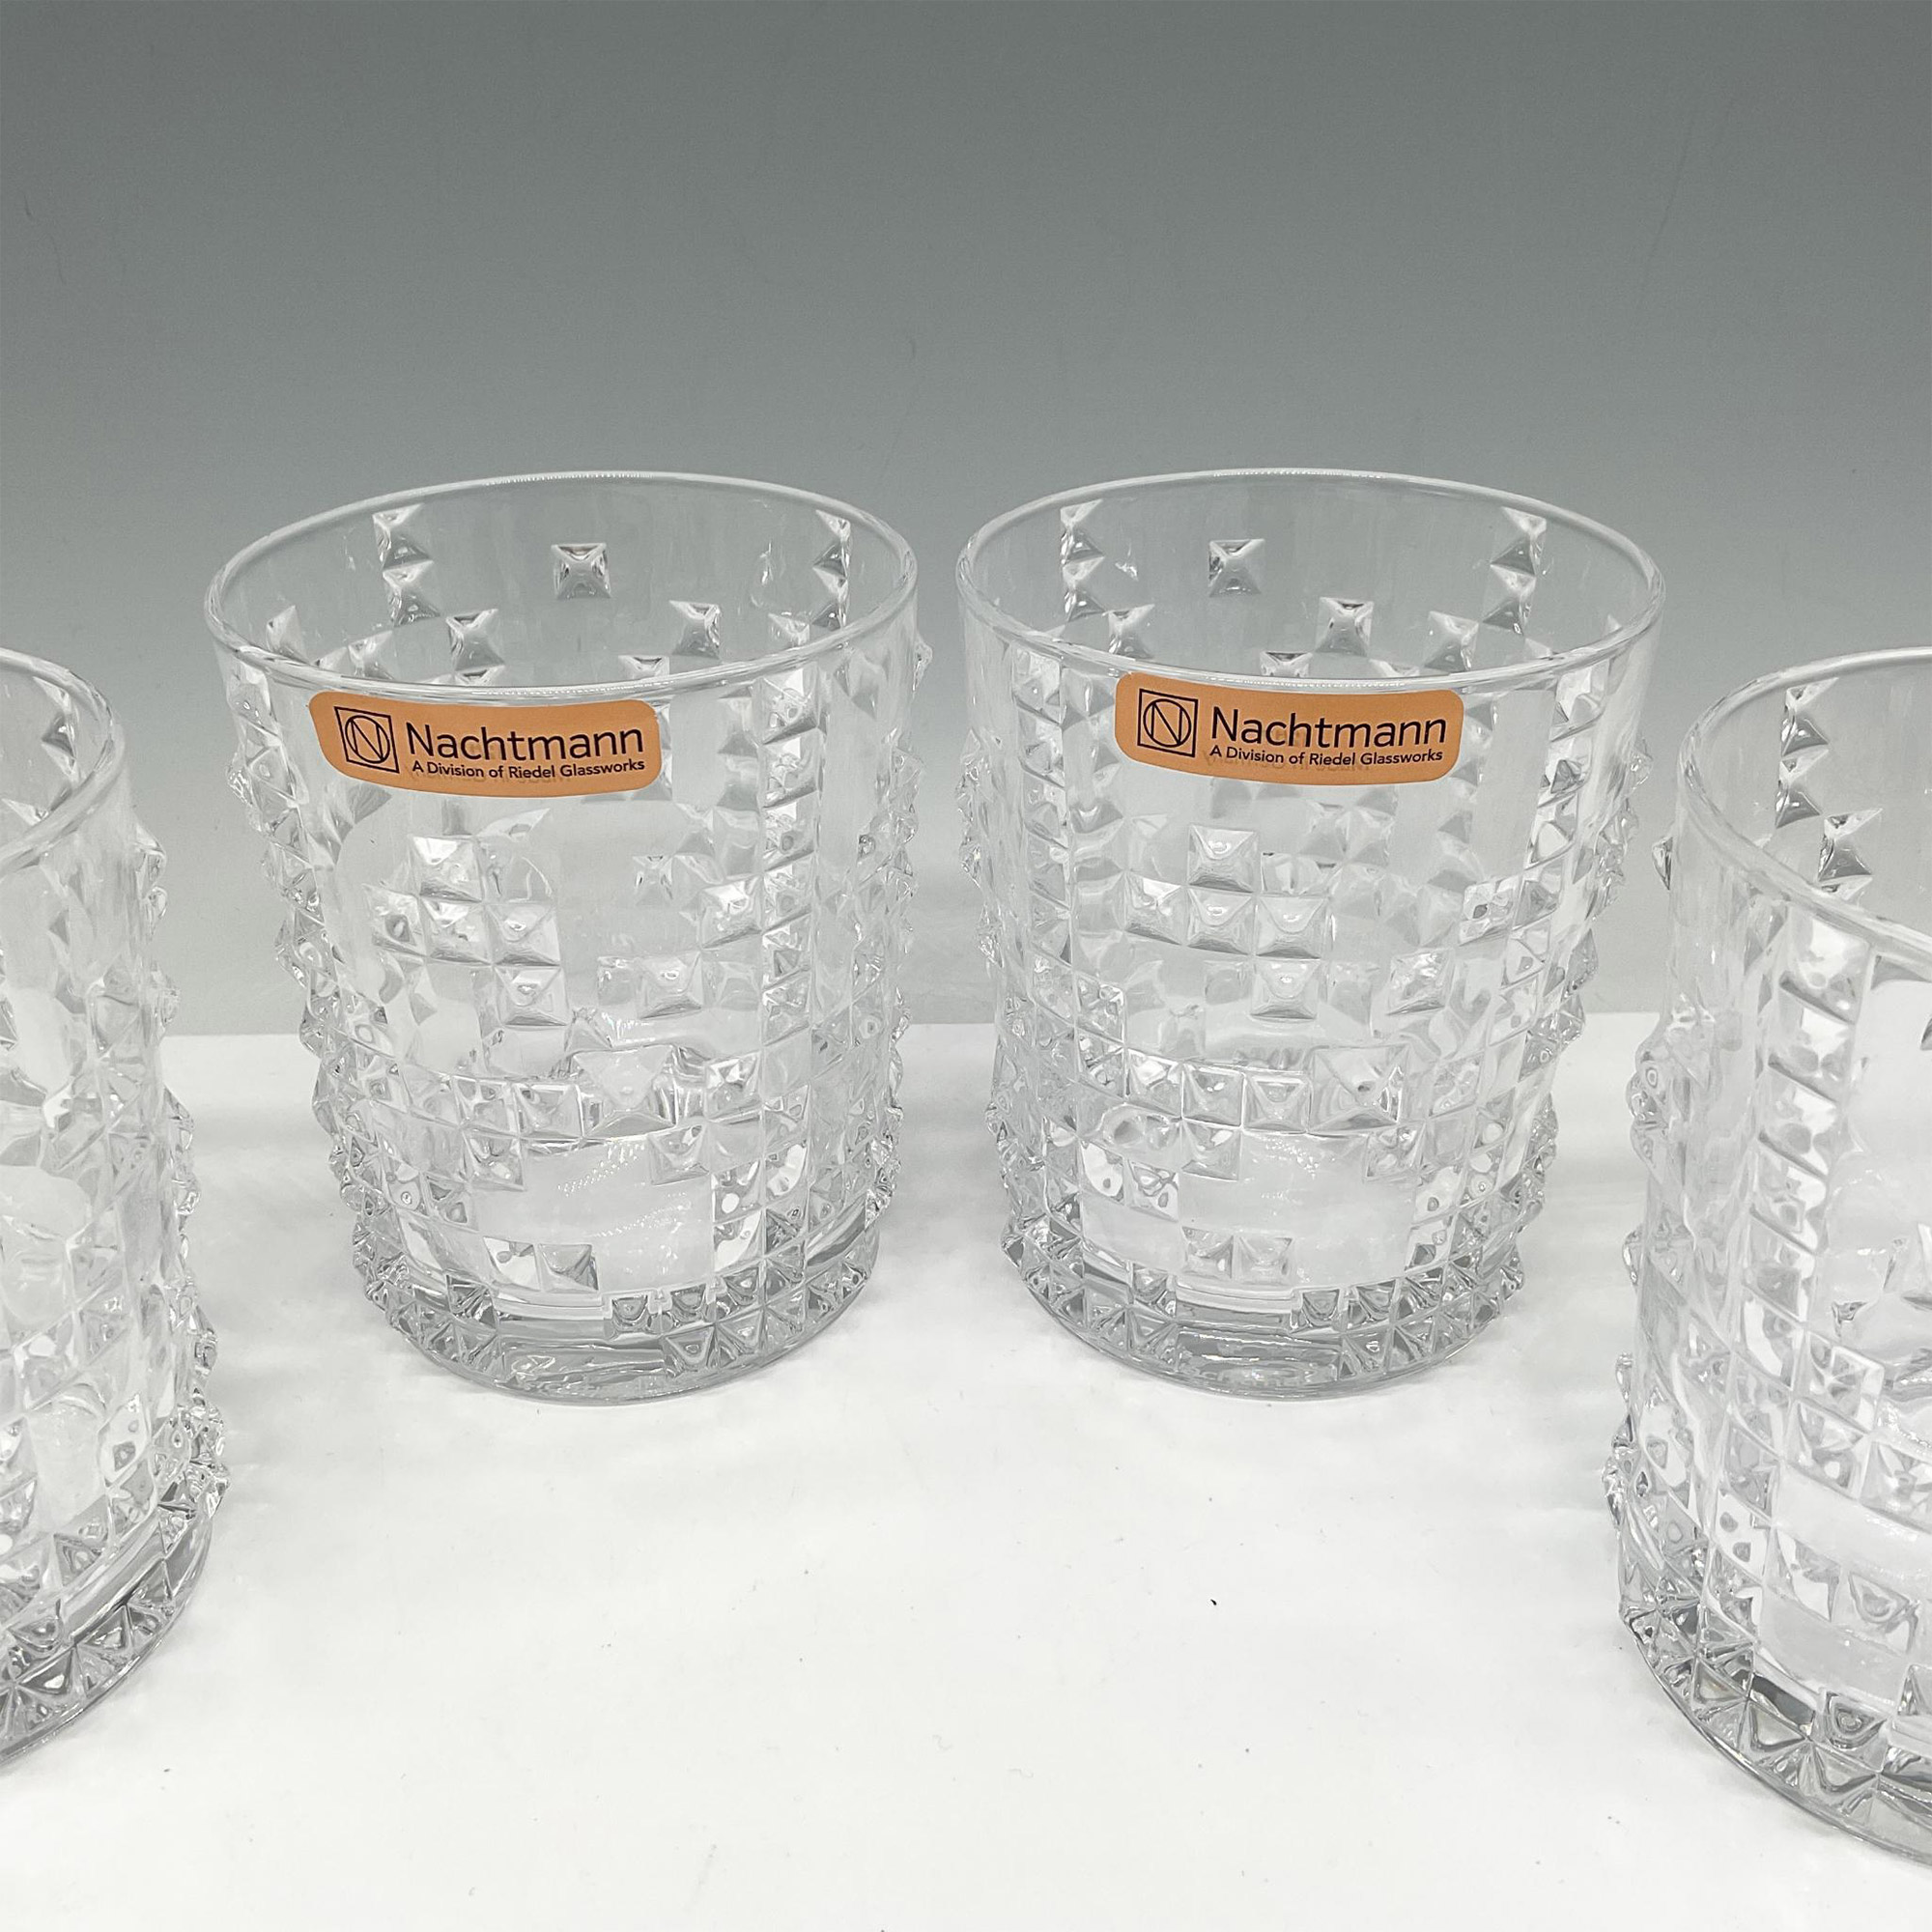 Nachtmann Bavarian Crystal Whisky Tumblers, Set of 4 - Image 3 of 4